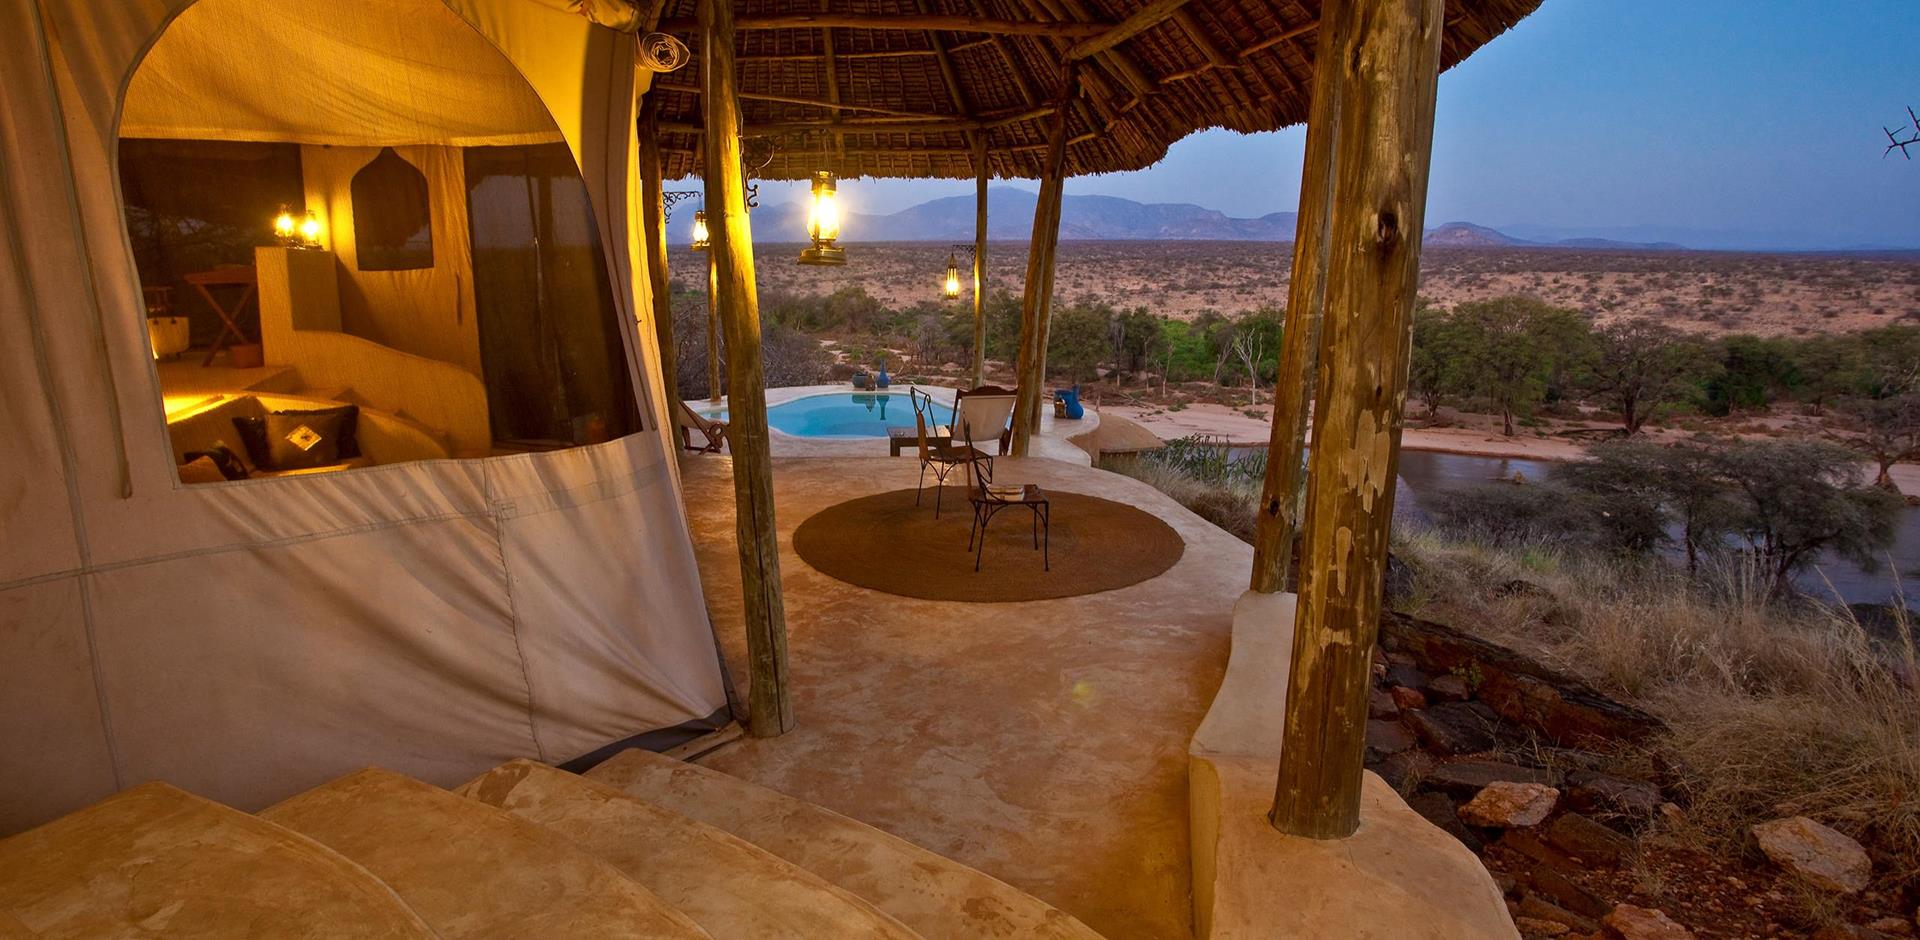 Pool terrace, Sasaab, Kenya, A&K